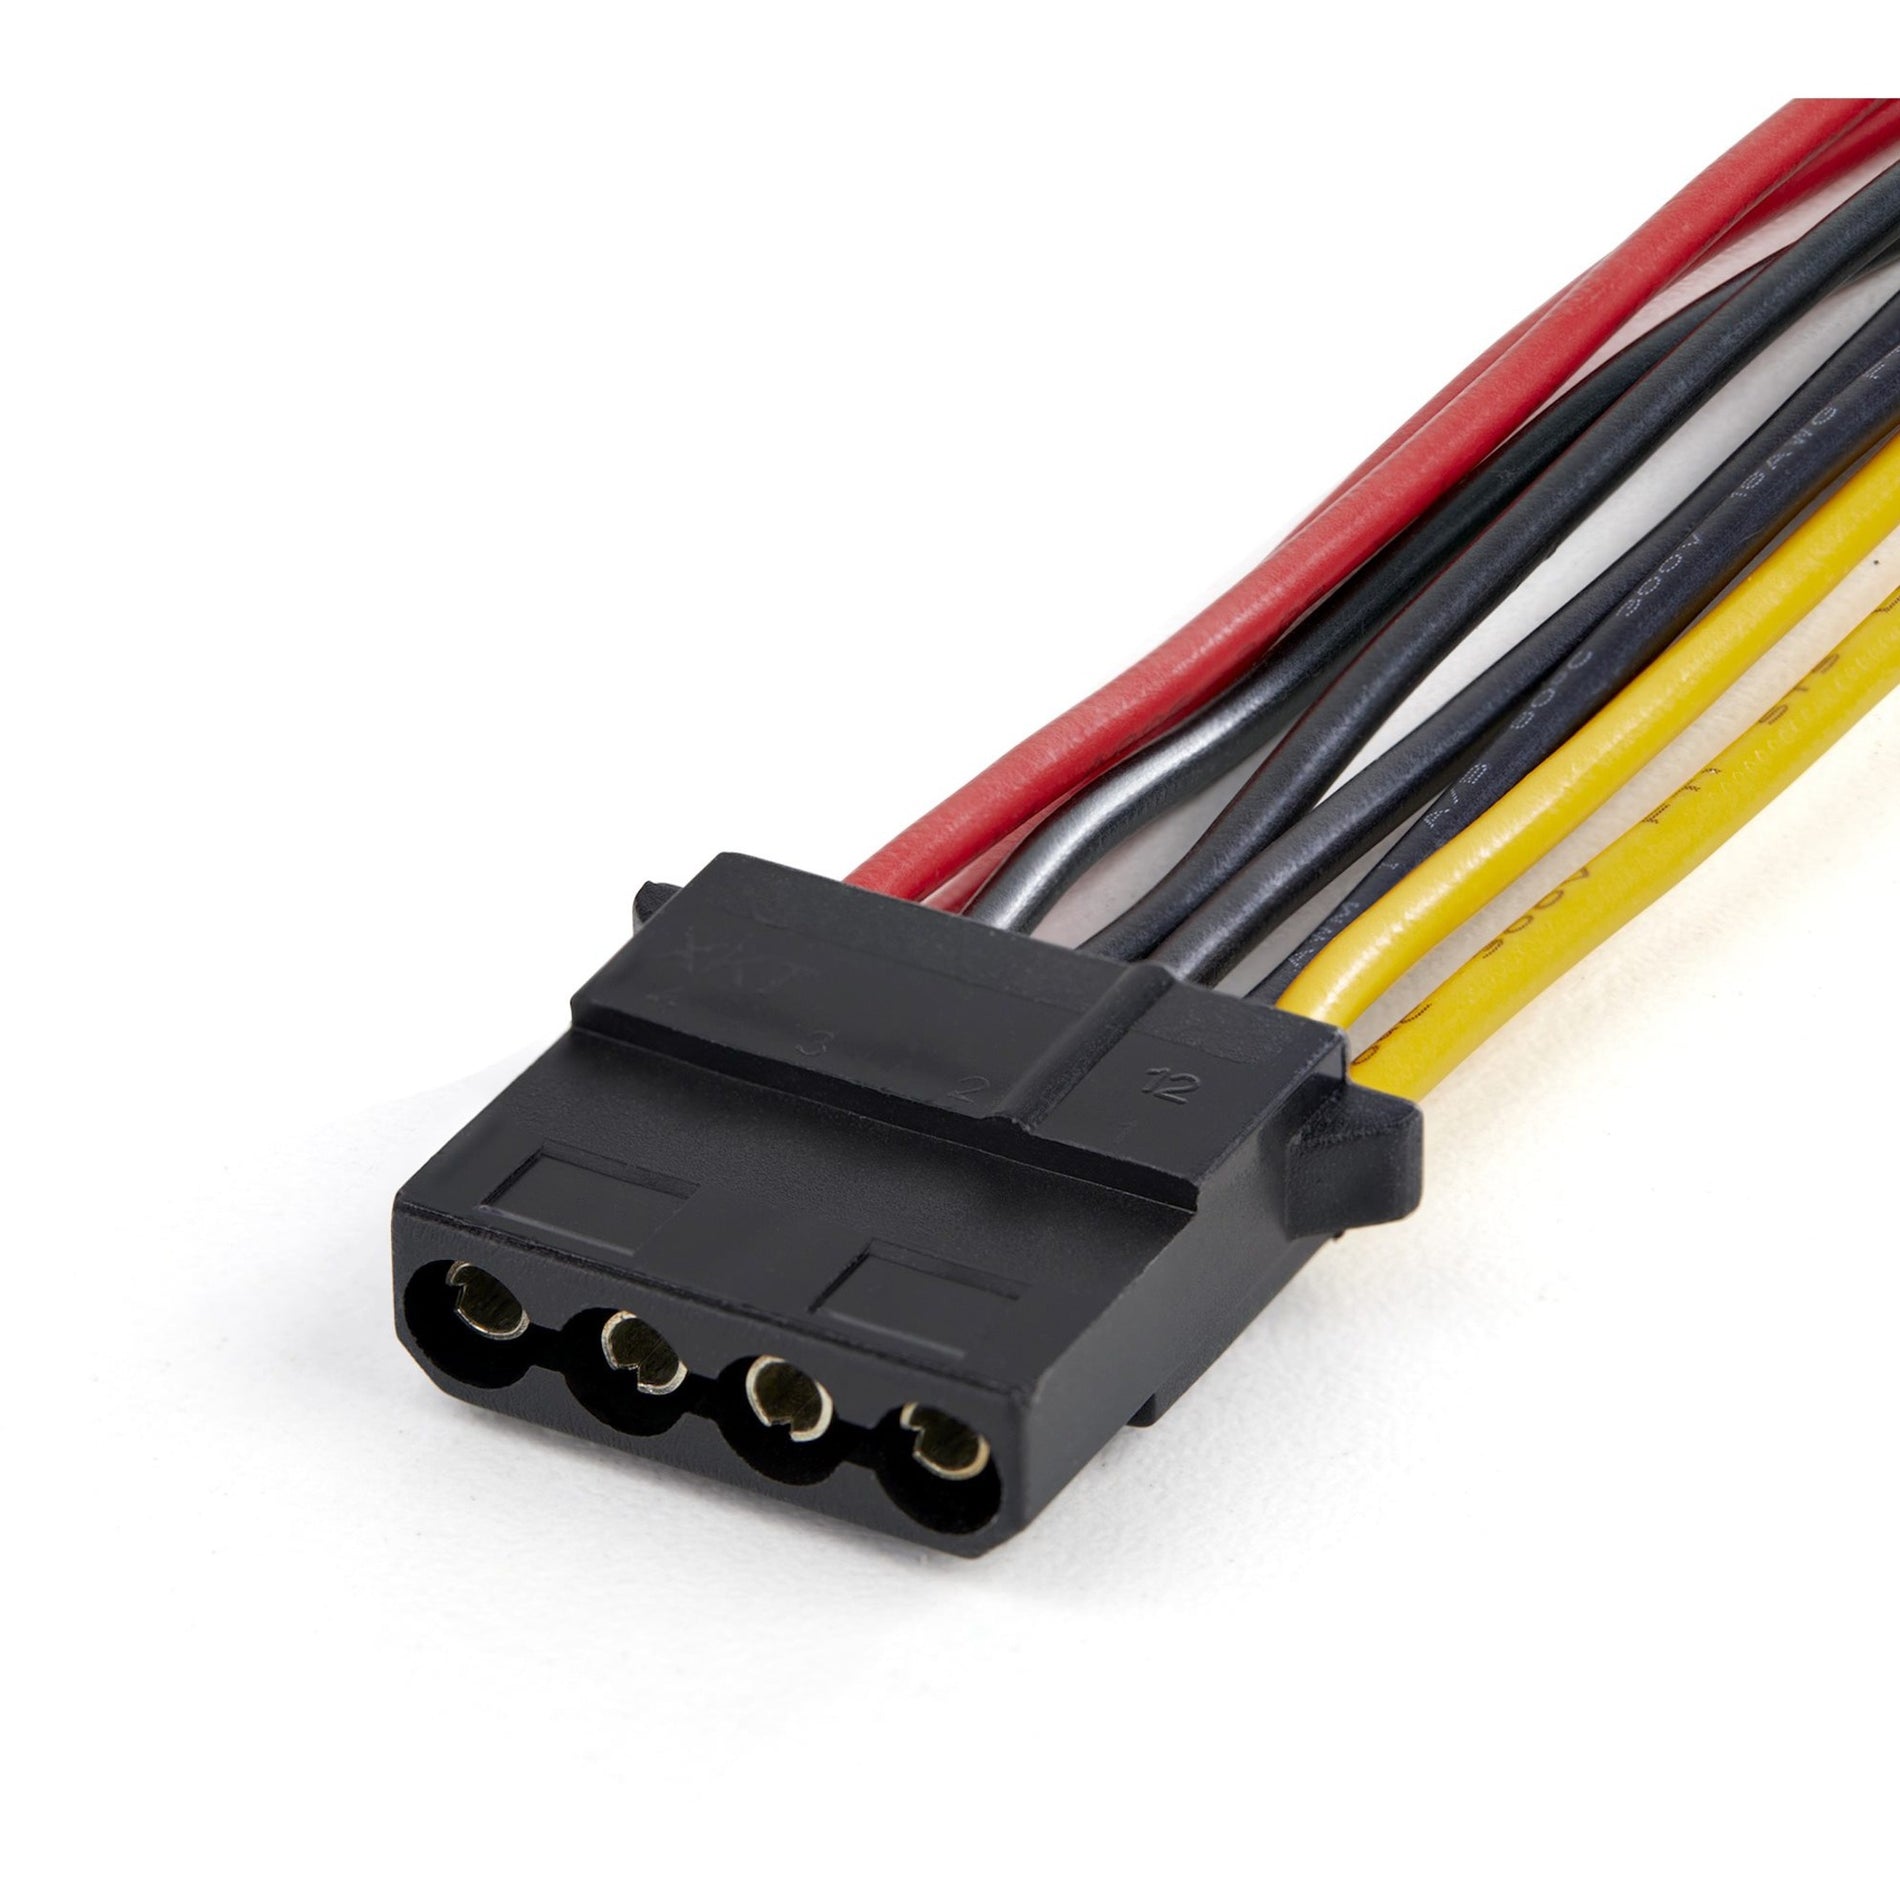 StarTech.com DSATPMOLP4 Splitter Cord, Dual SATA to LP4 Power Doubler Cable Adapter, 9 Amps/108W